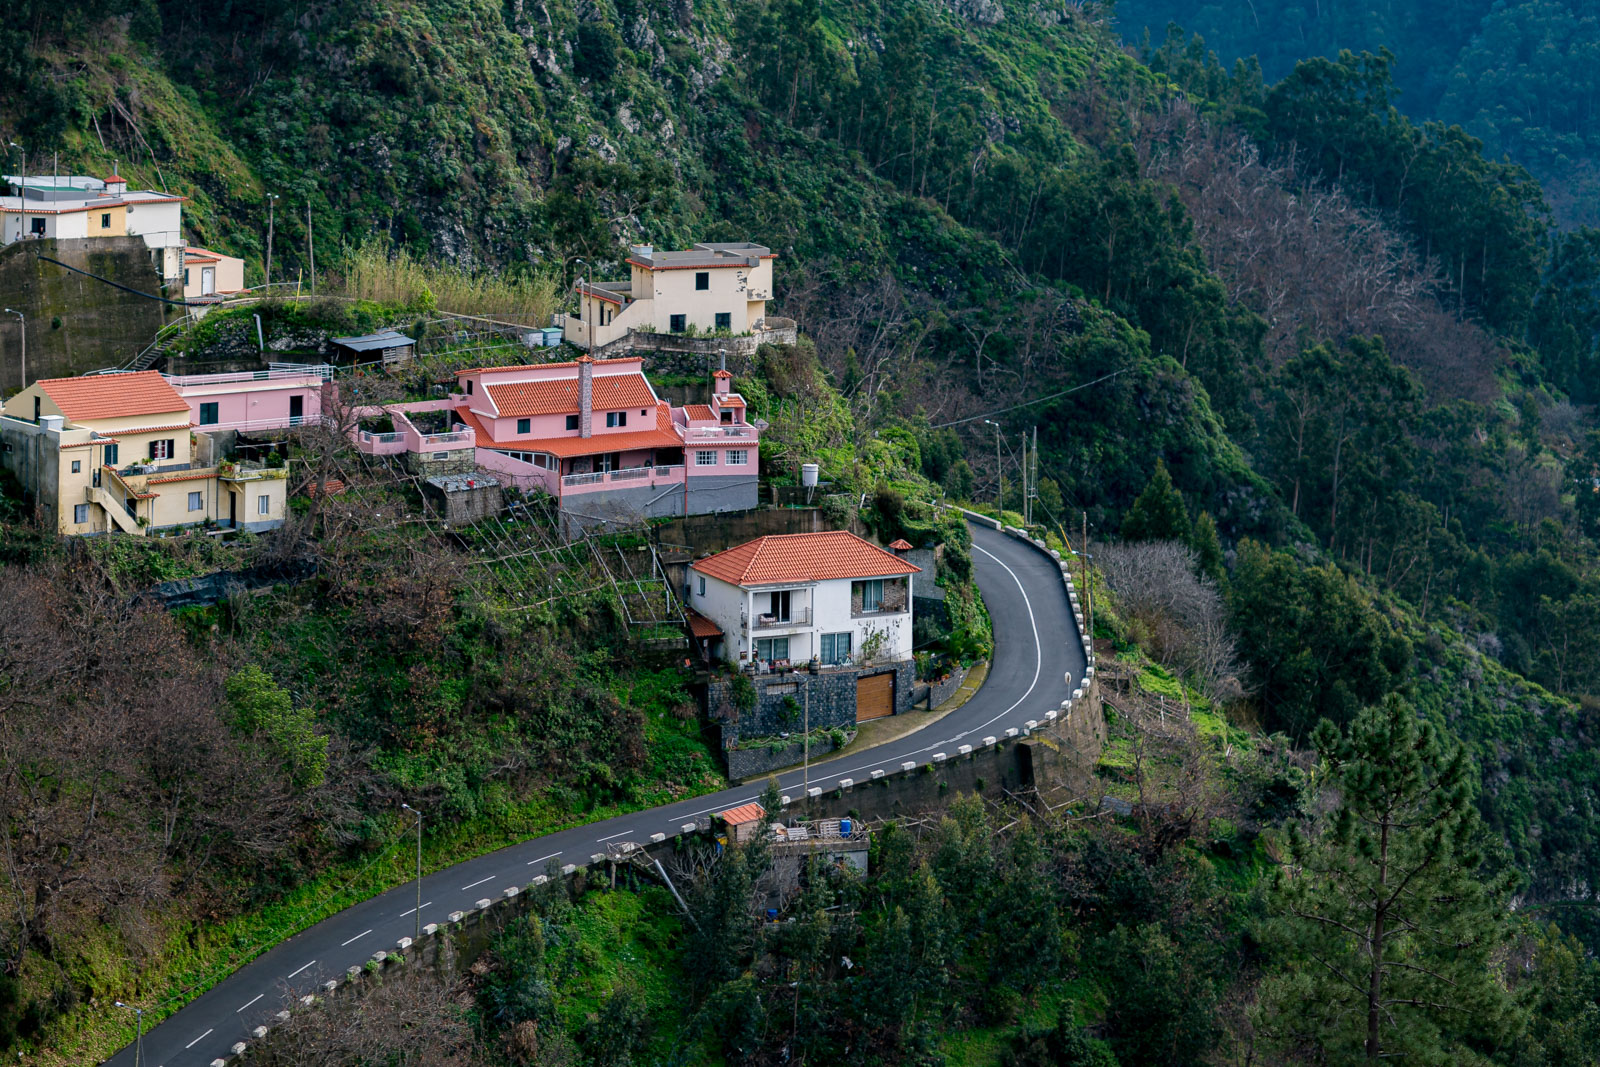  Madeira road